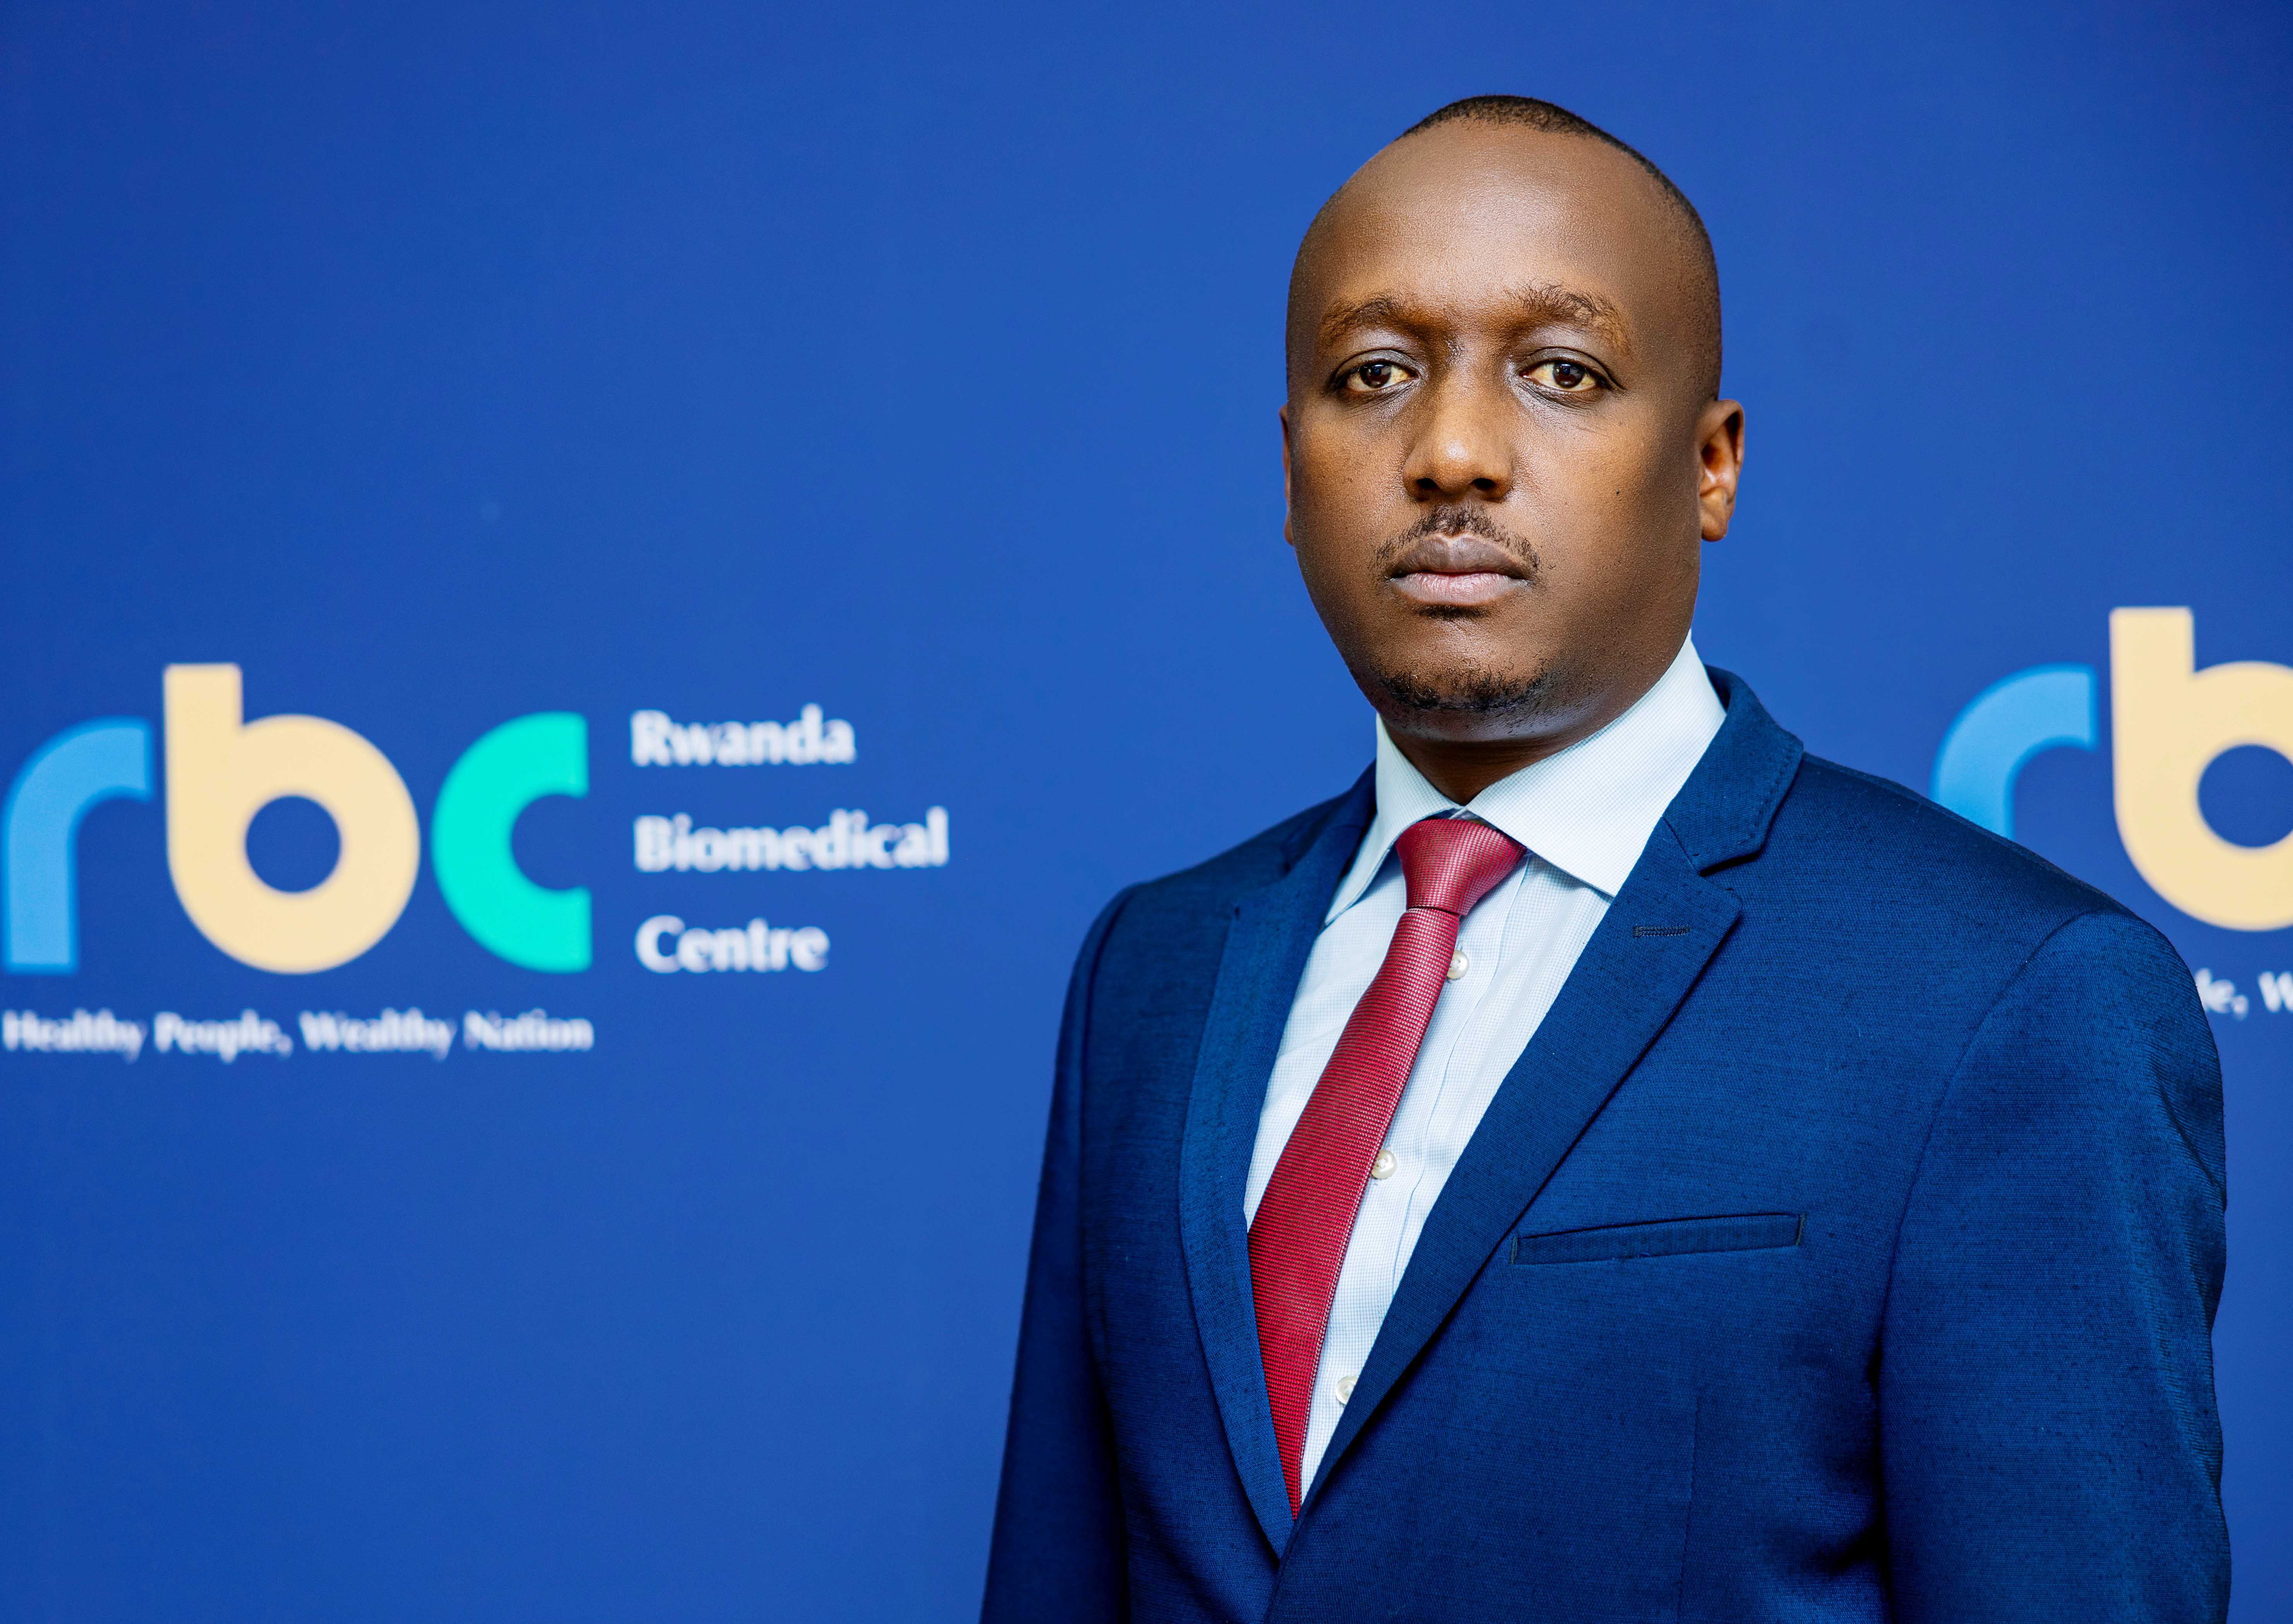 Prof Claude Mambo Muvunyi, the new Director General for Rwanda Biomedical Centre (RBC). Courtesy